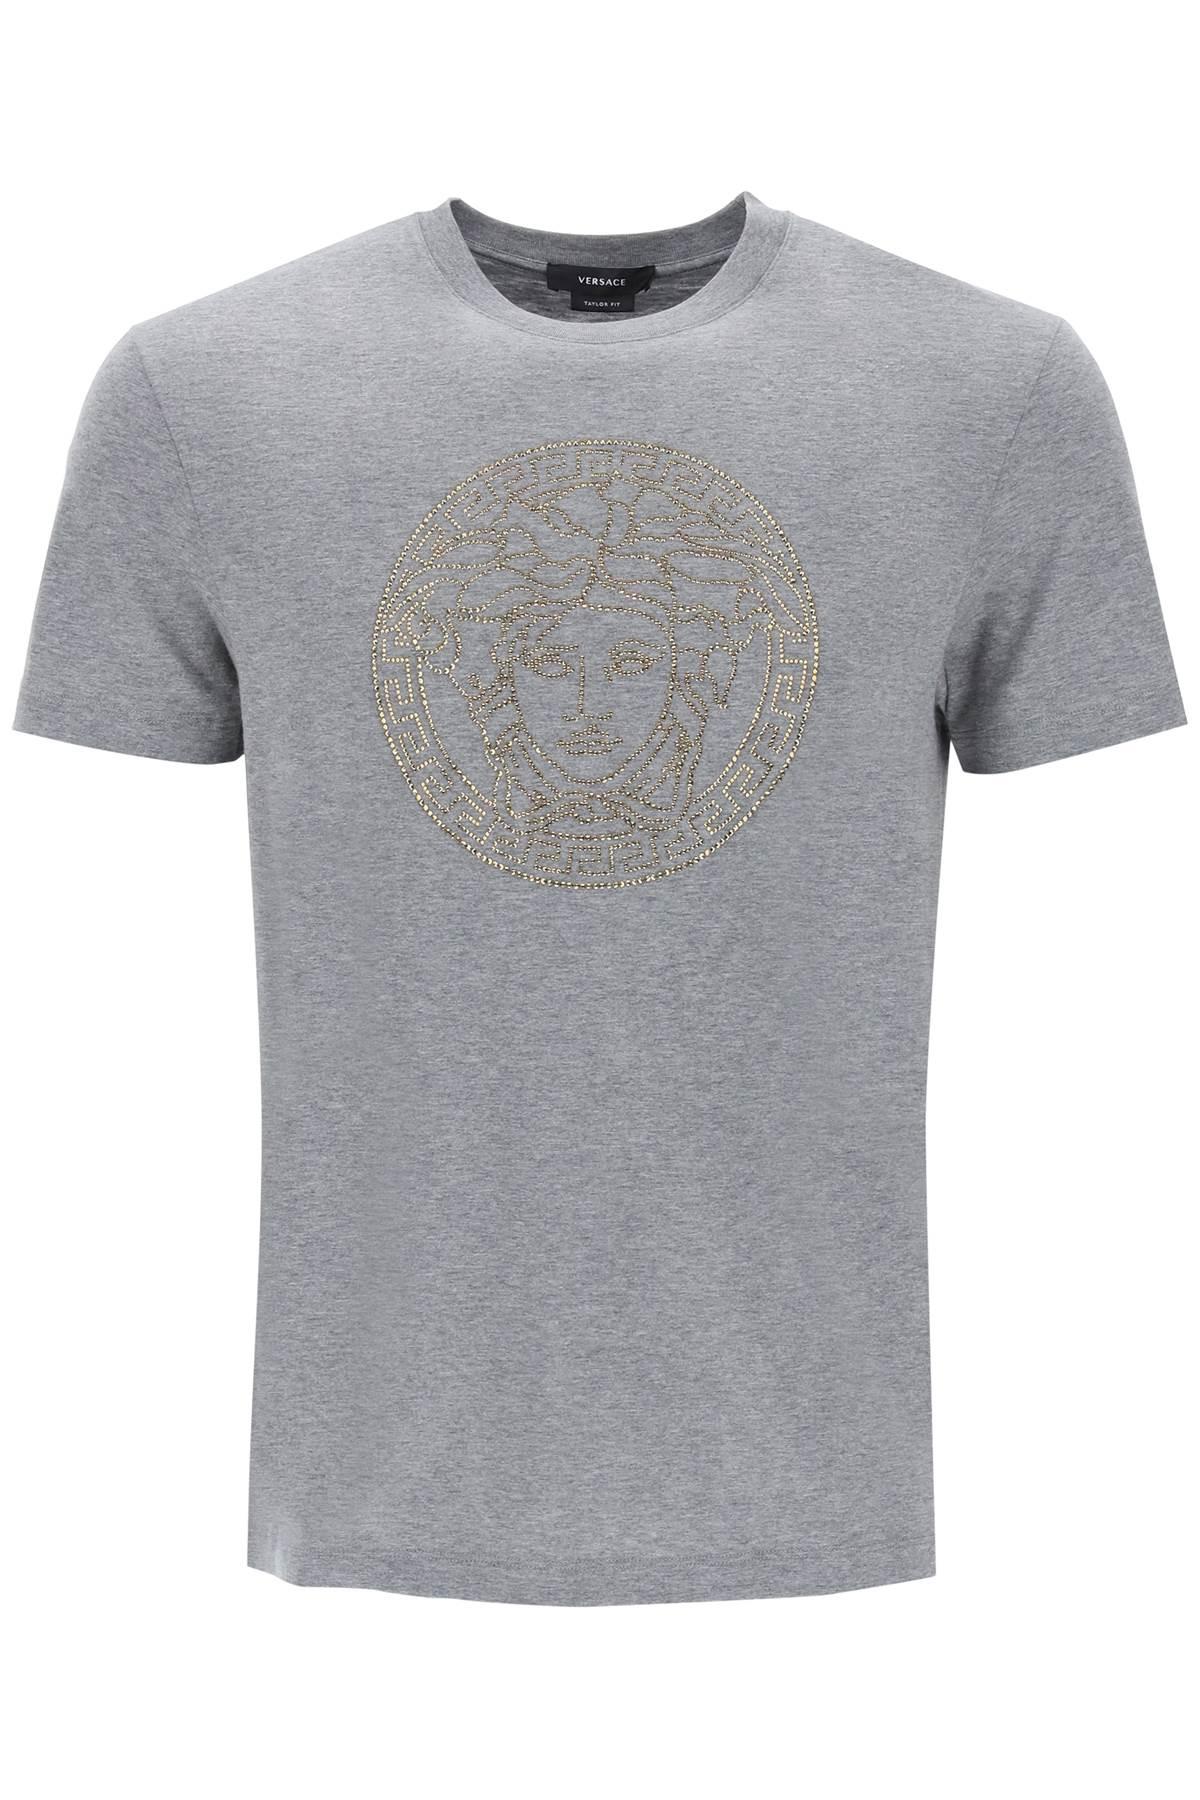 VERSACE Rhinestones Medusa t-shirt